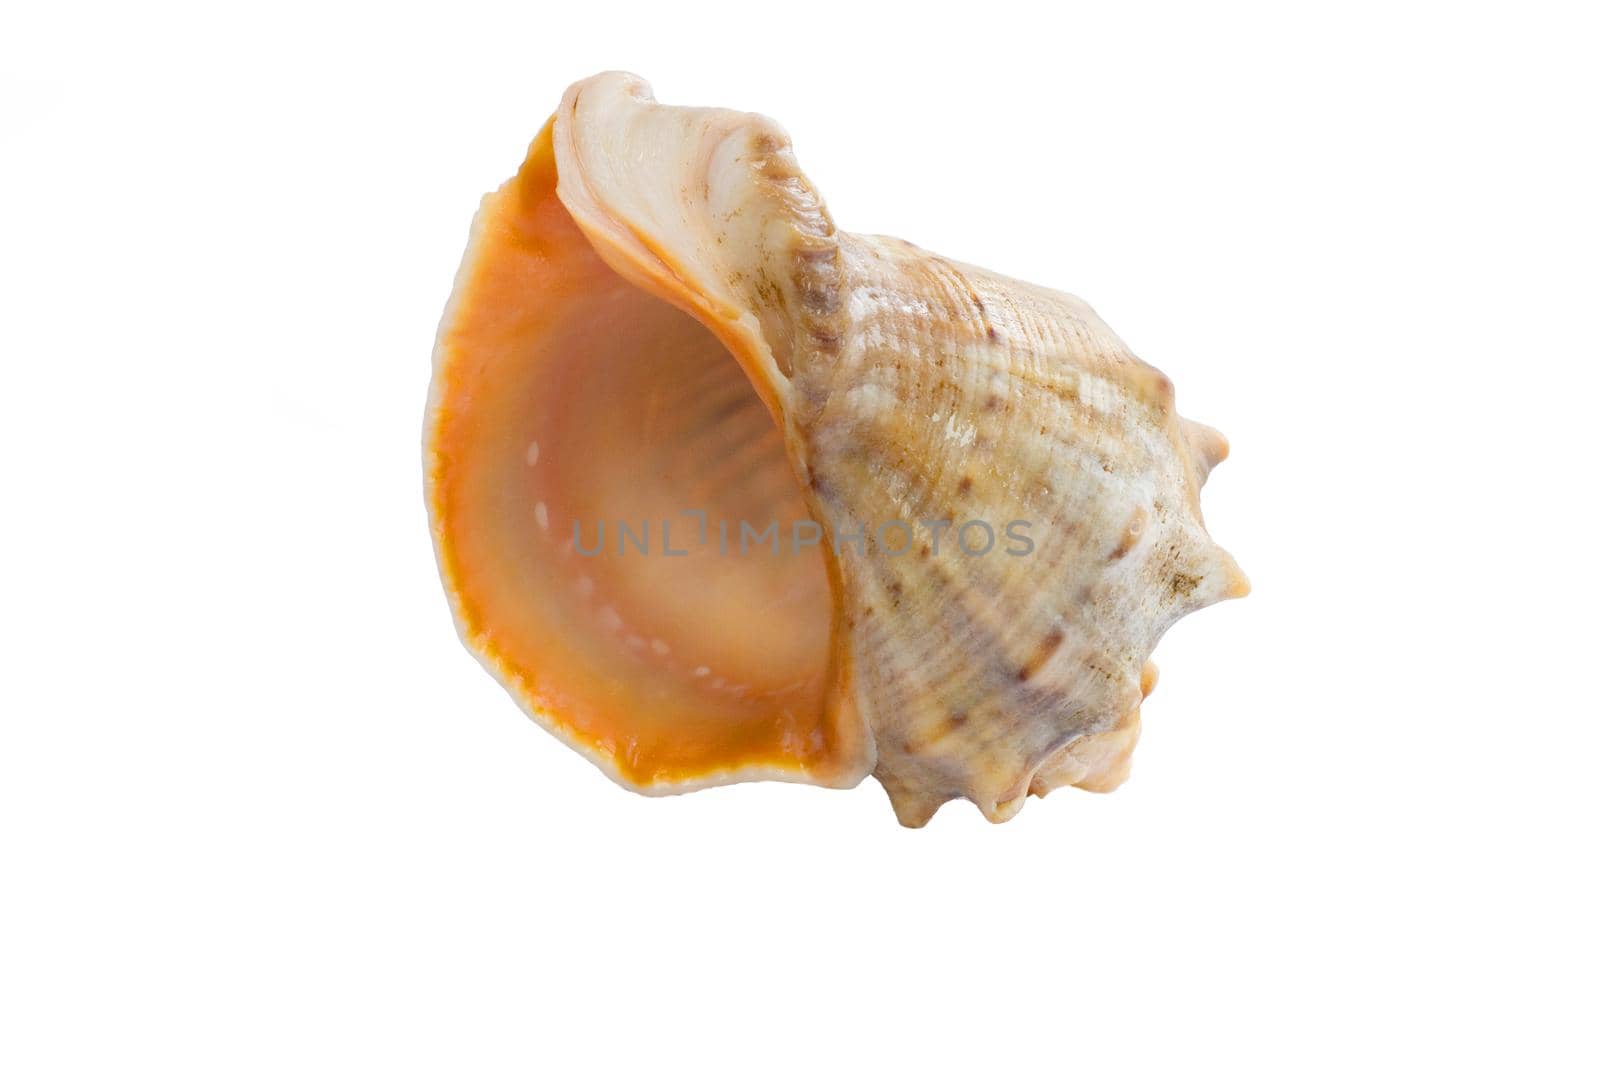 Marine light yellow orange gastropod seashell close-up on white background by VeraVerano